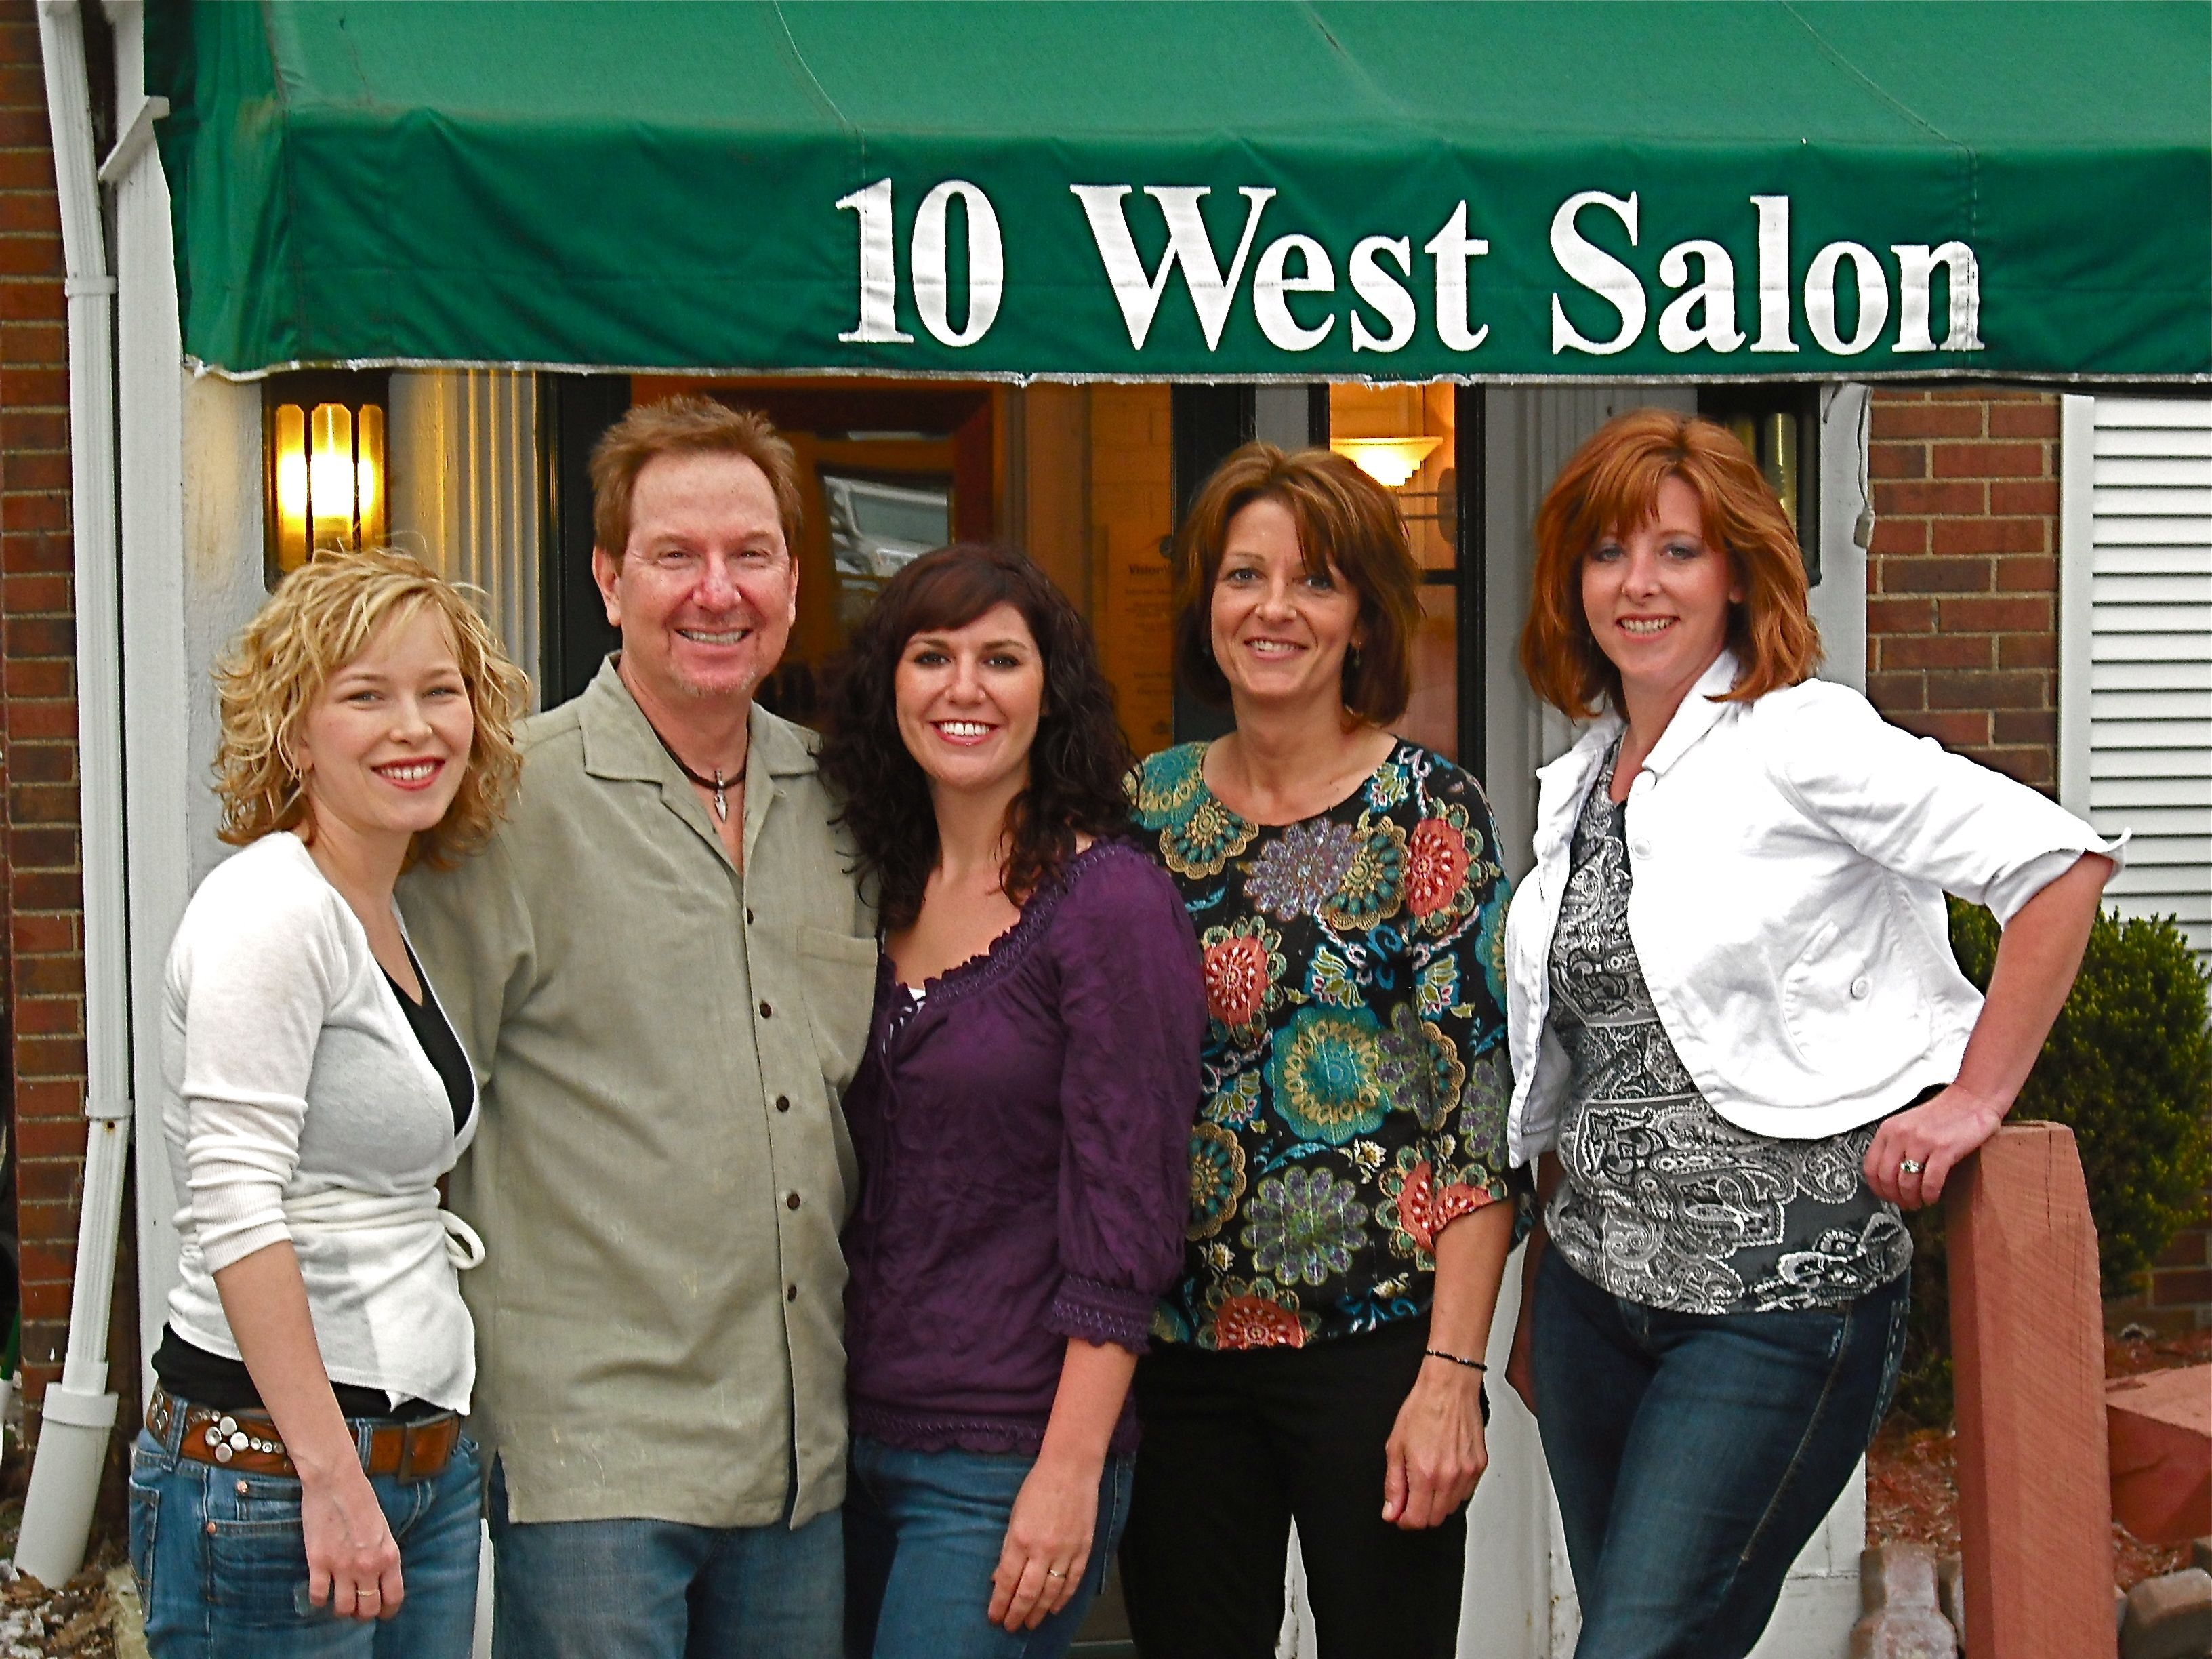 hair stylists of 10 west salon chagrin falls quality staff